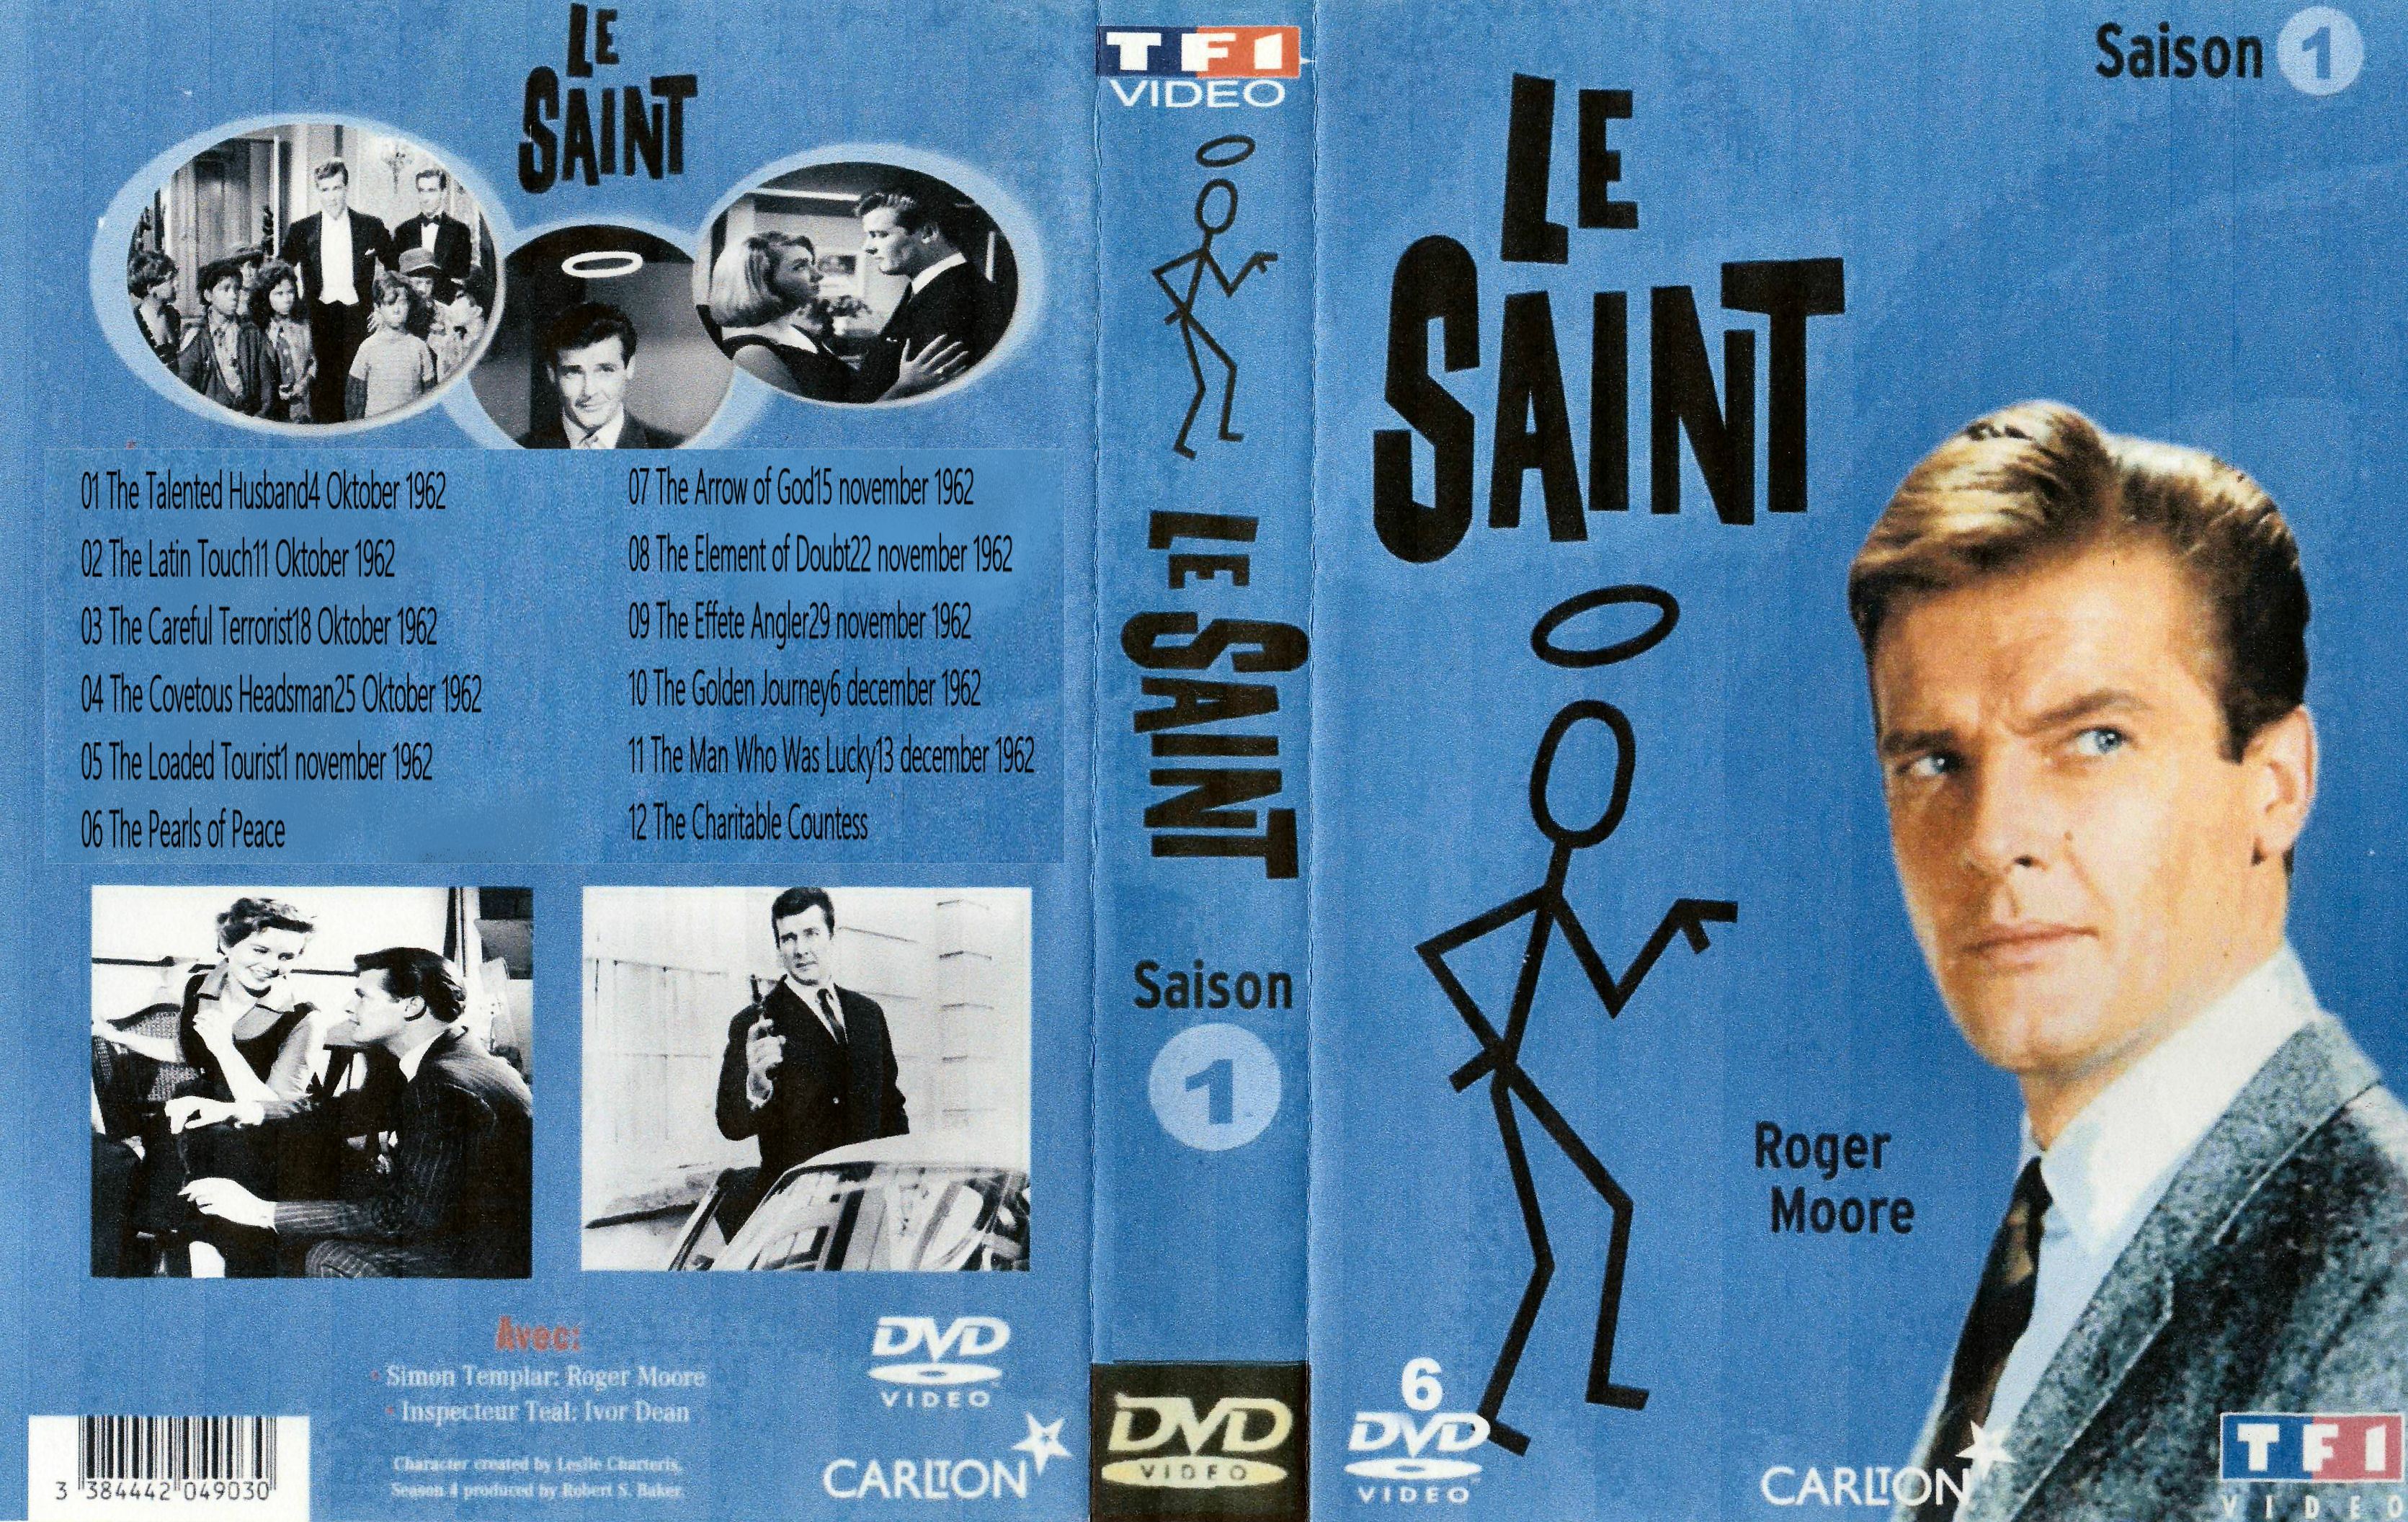 The Saint Seizoen 1 ( 1962 ) DvD 1